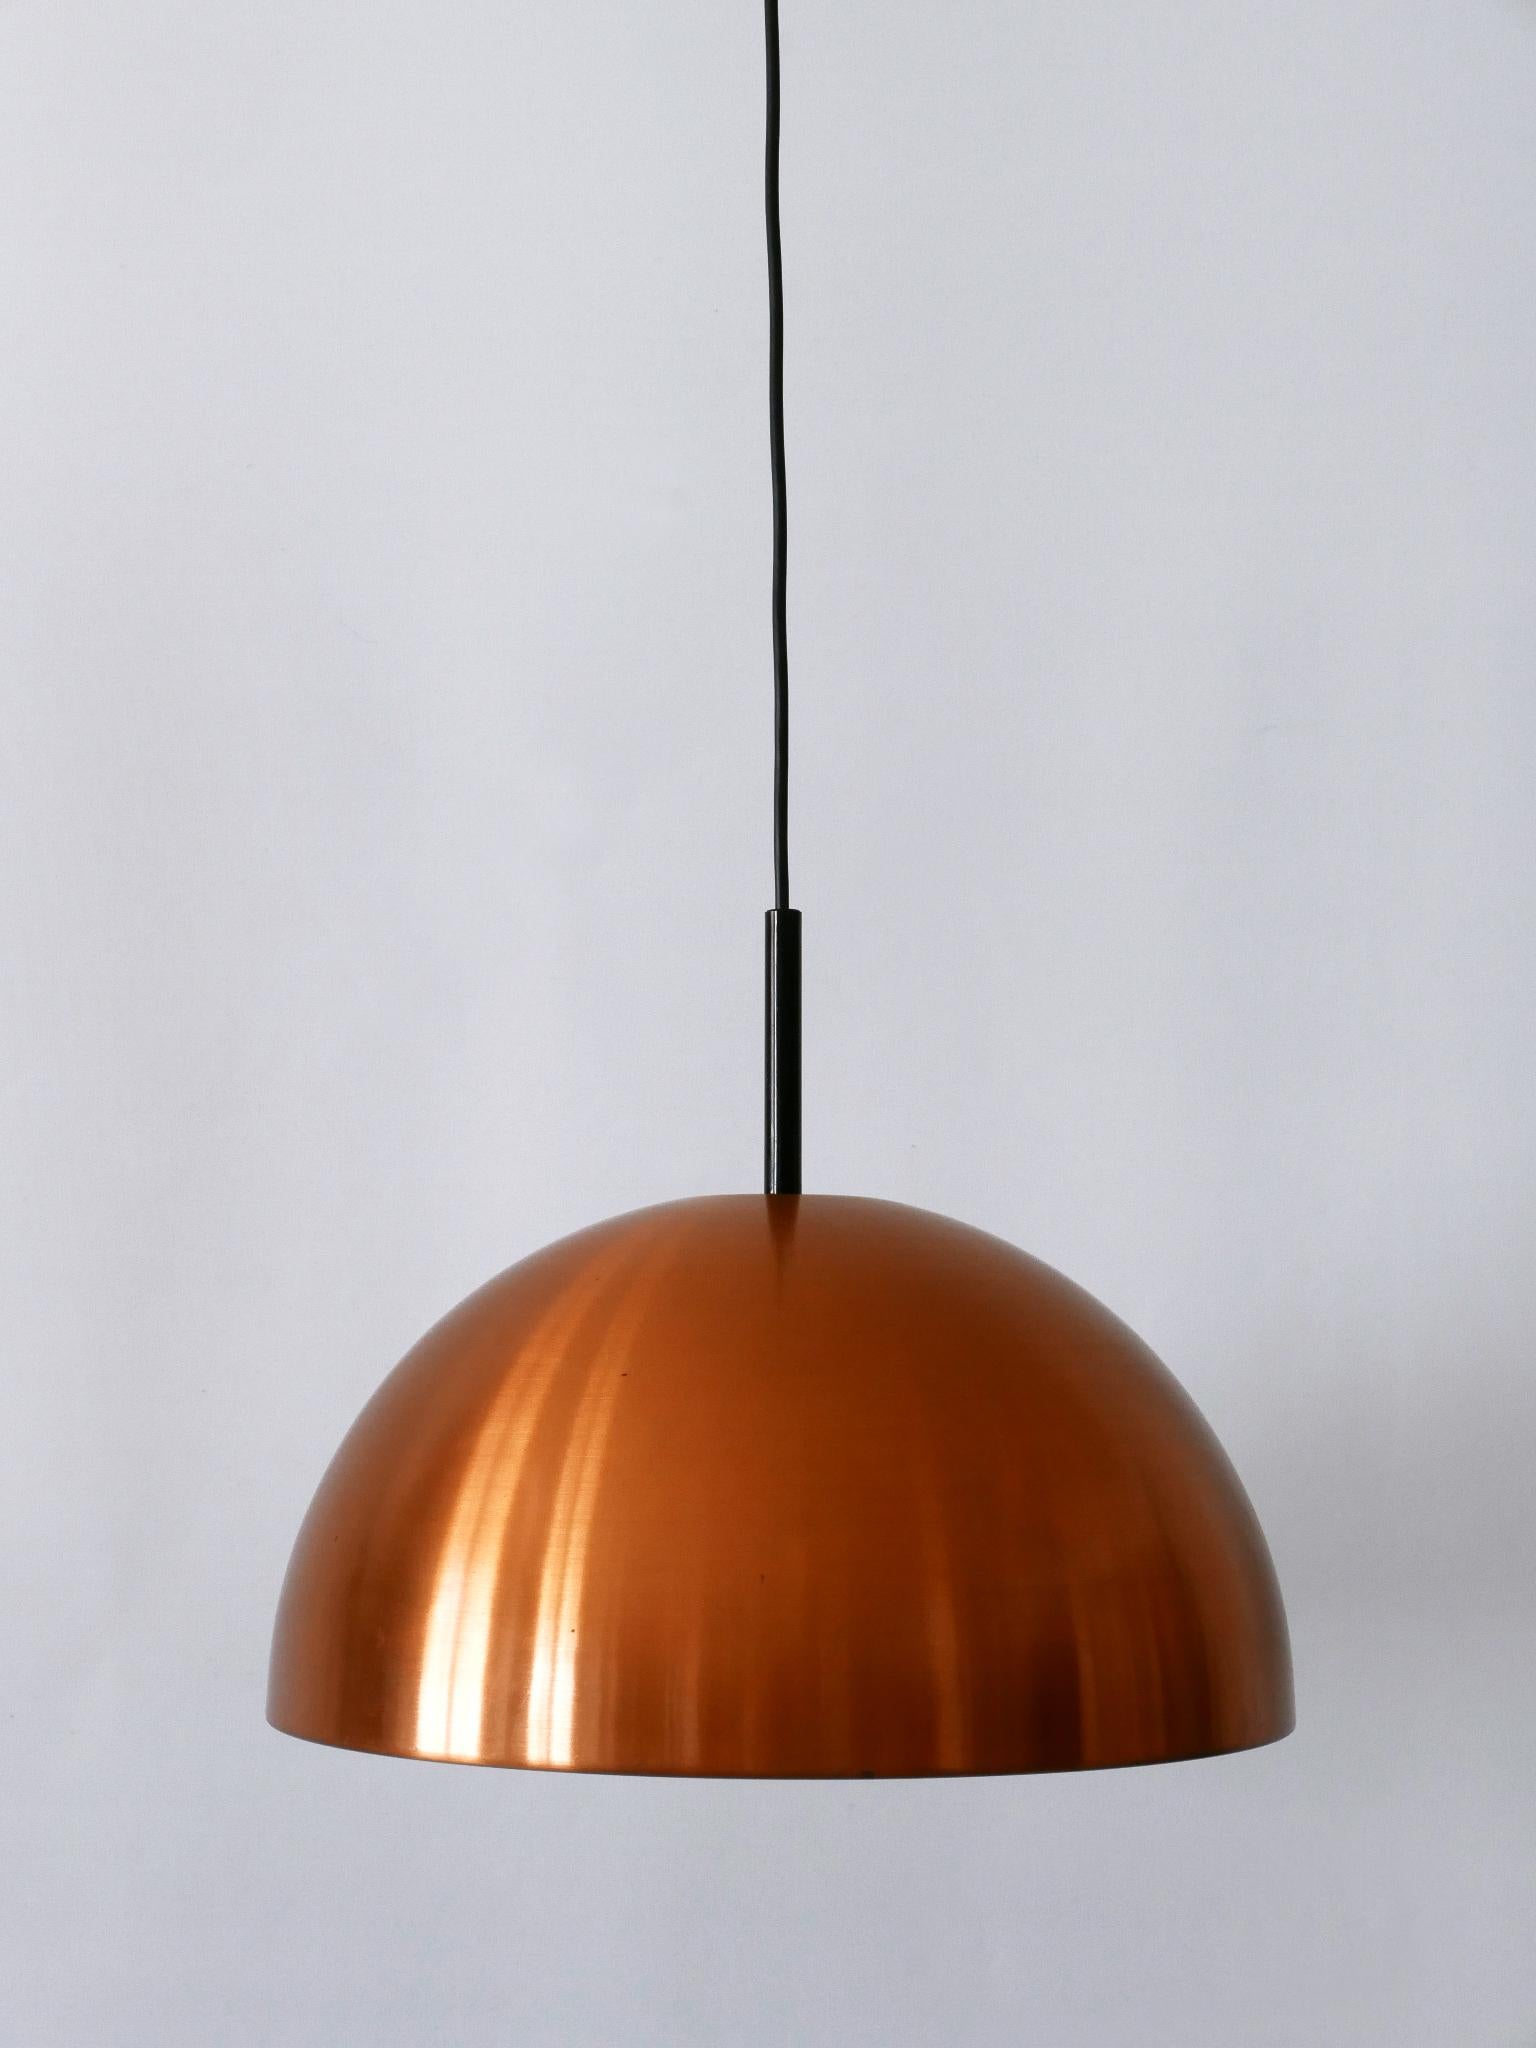 Elegant Mid-Century Modern Copper Pendant Lamp by Staff & Schwarz Germany 1960s For Sale 8